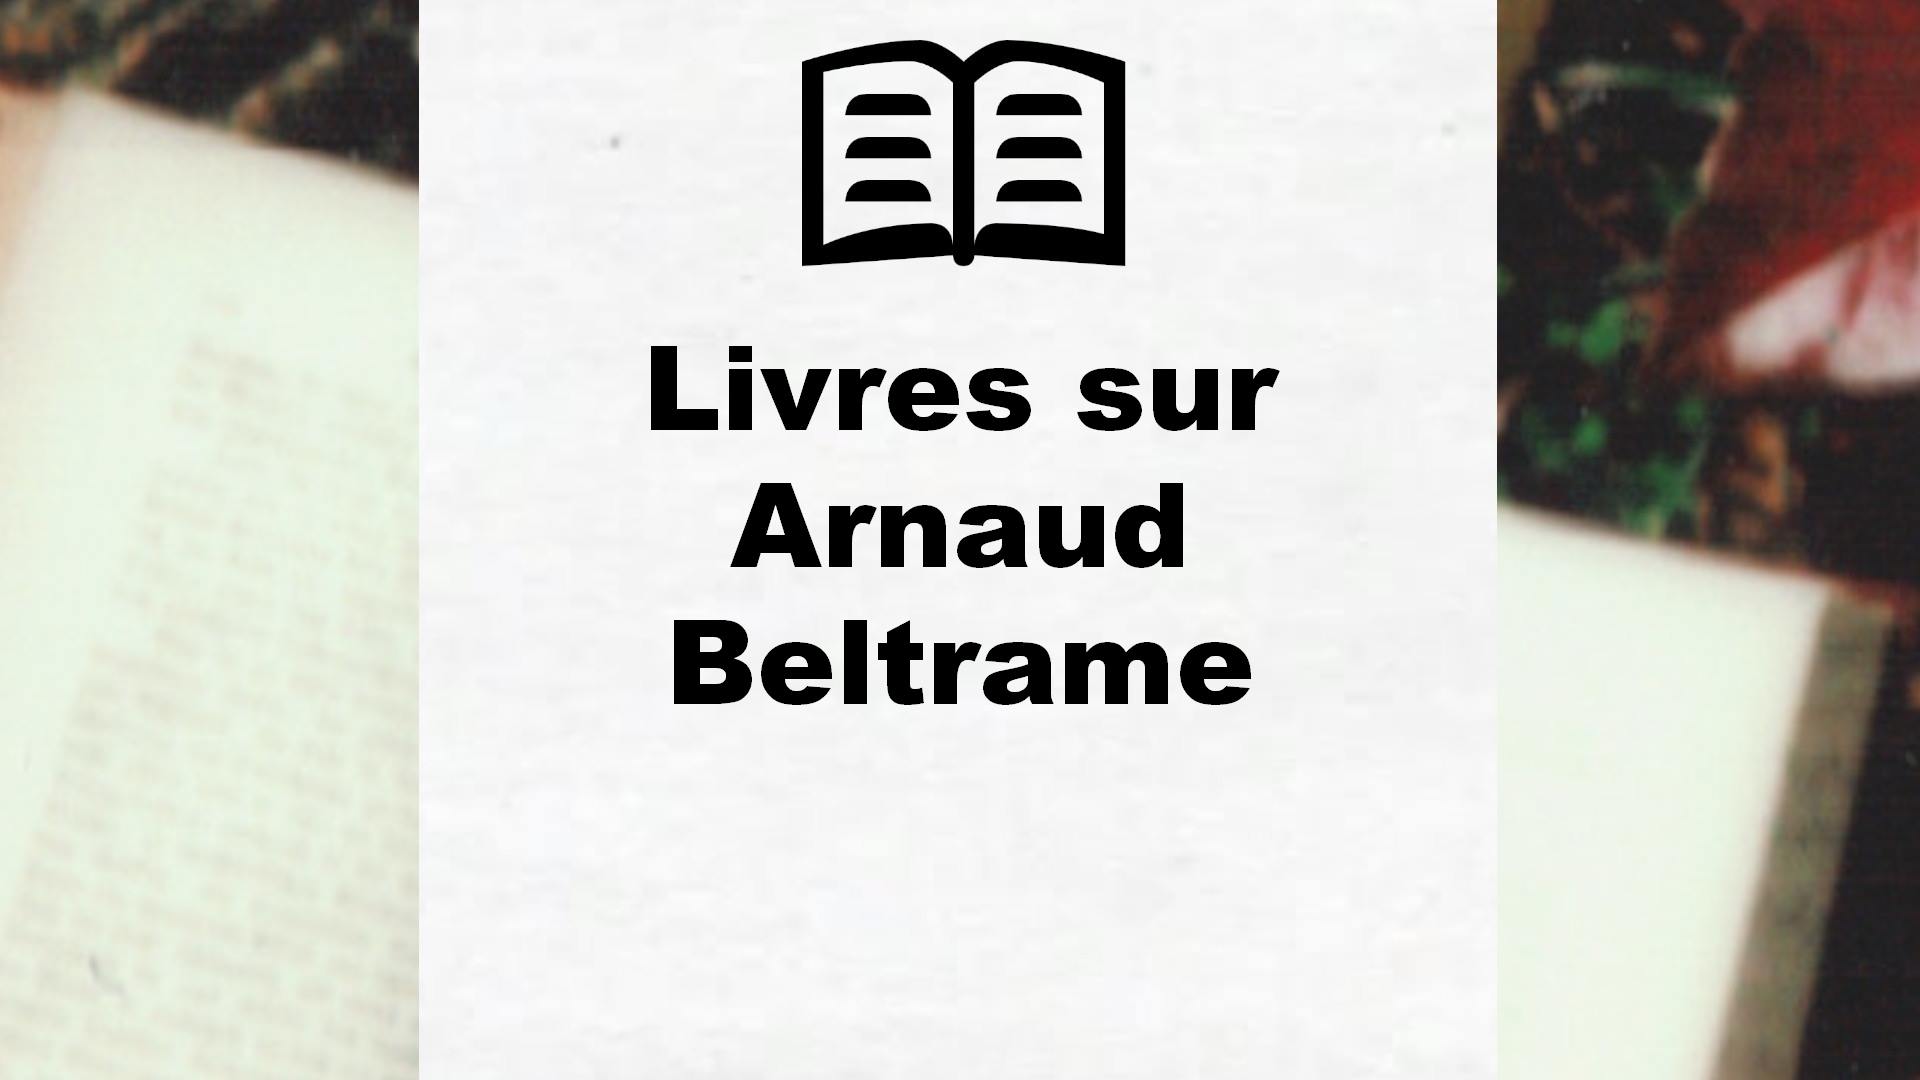 Livres sur Arnaud Beltrame